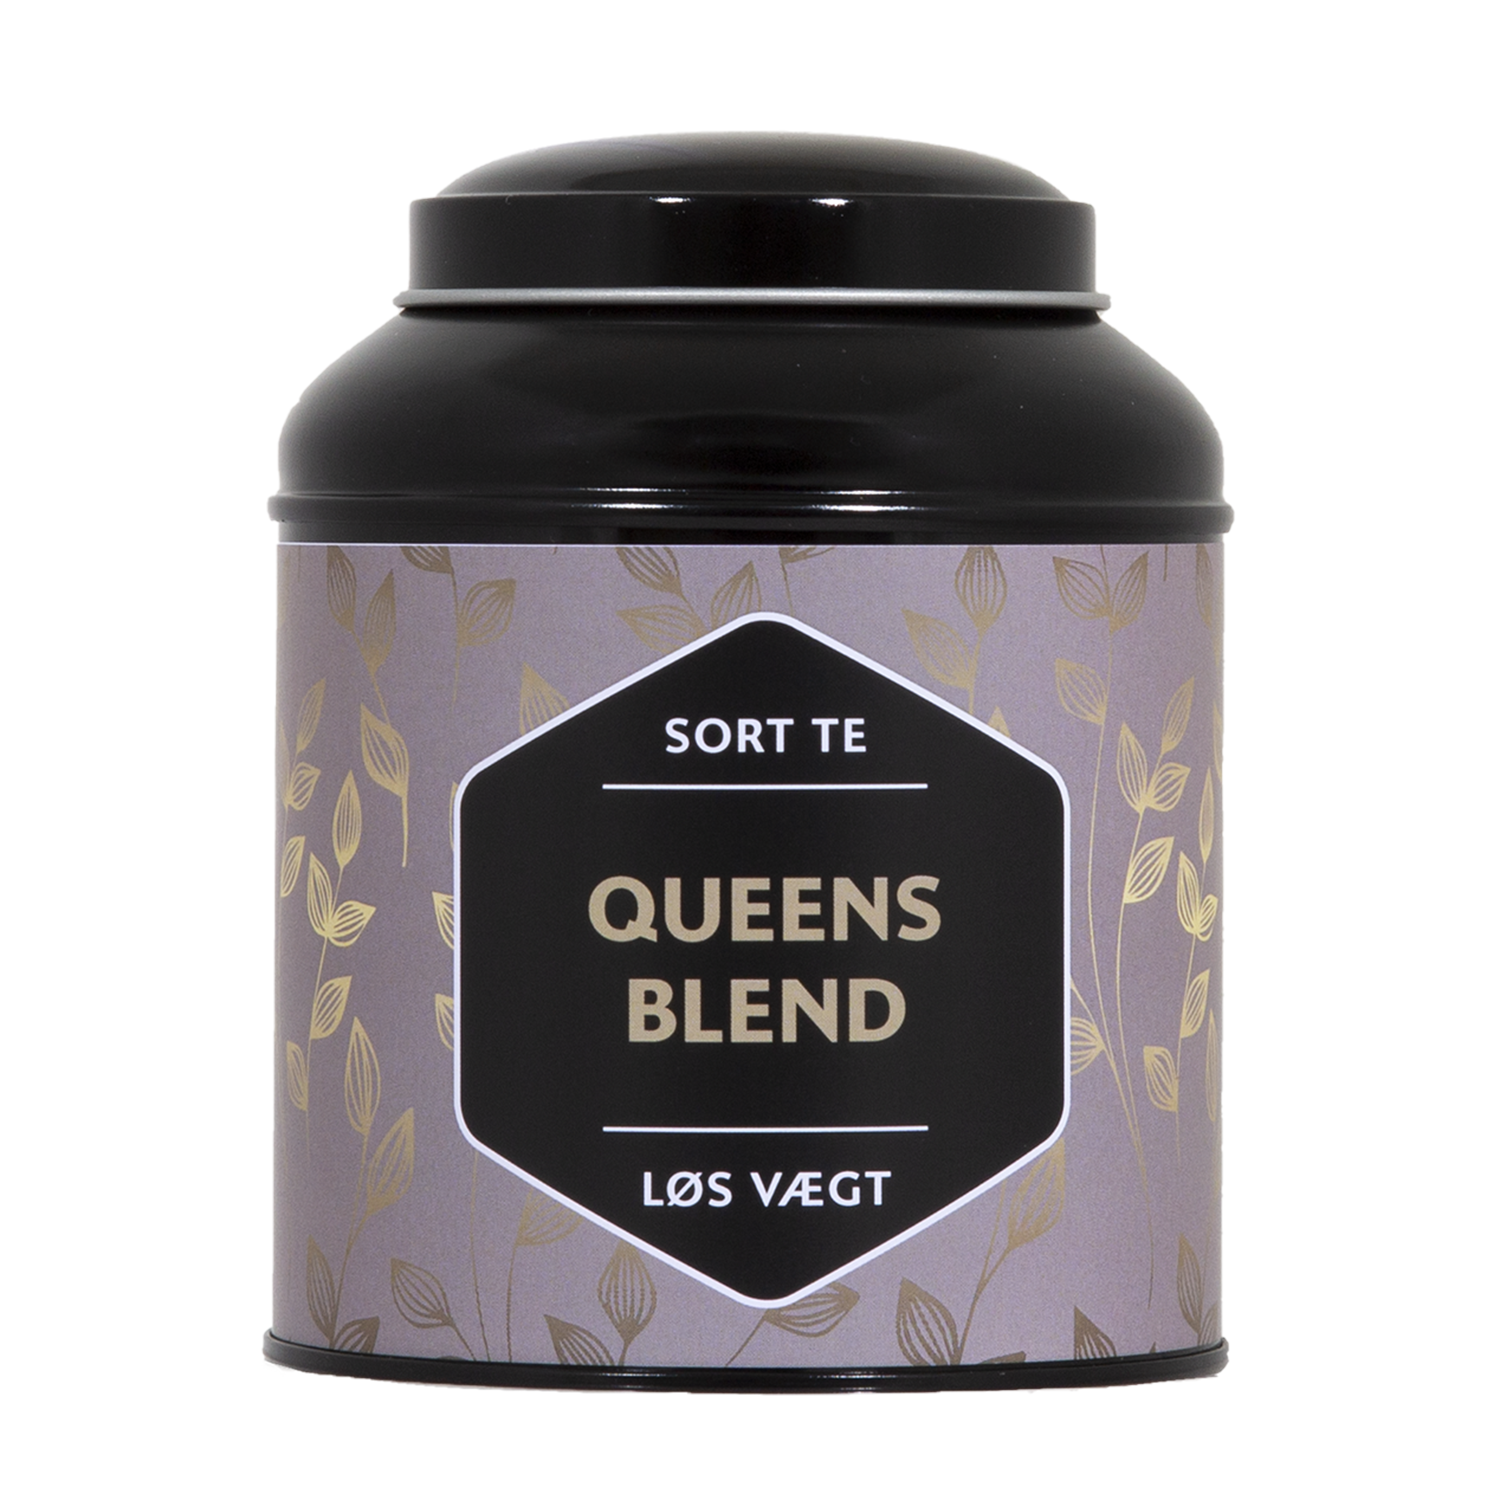 Queens blend te i dåse 120g